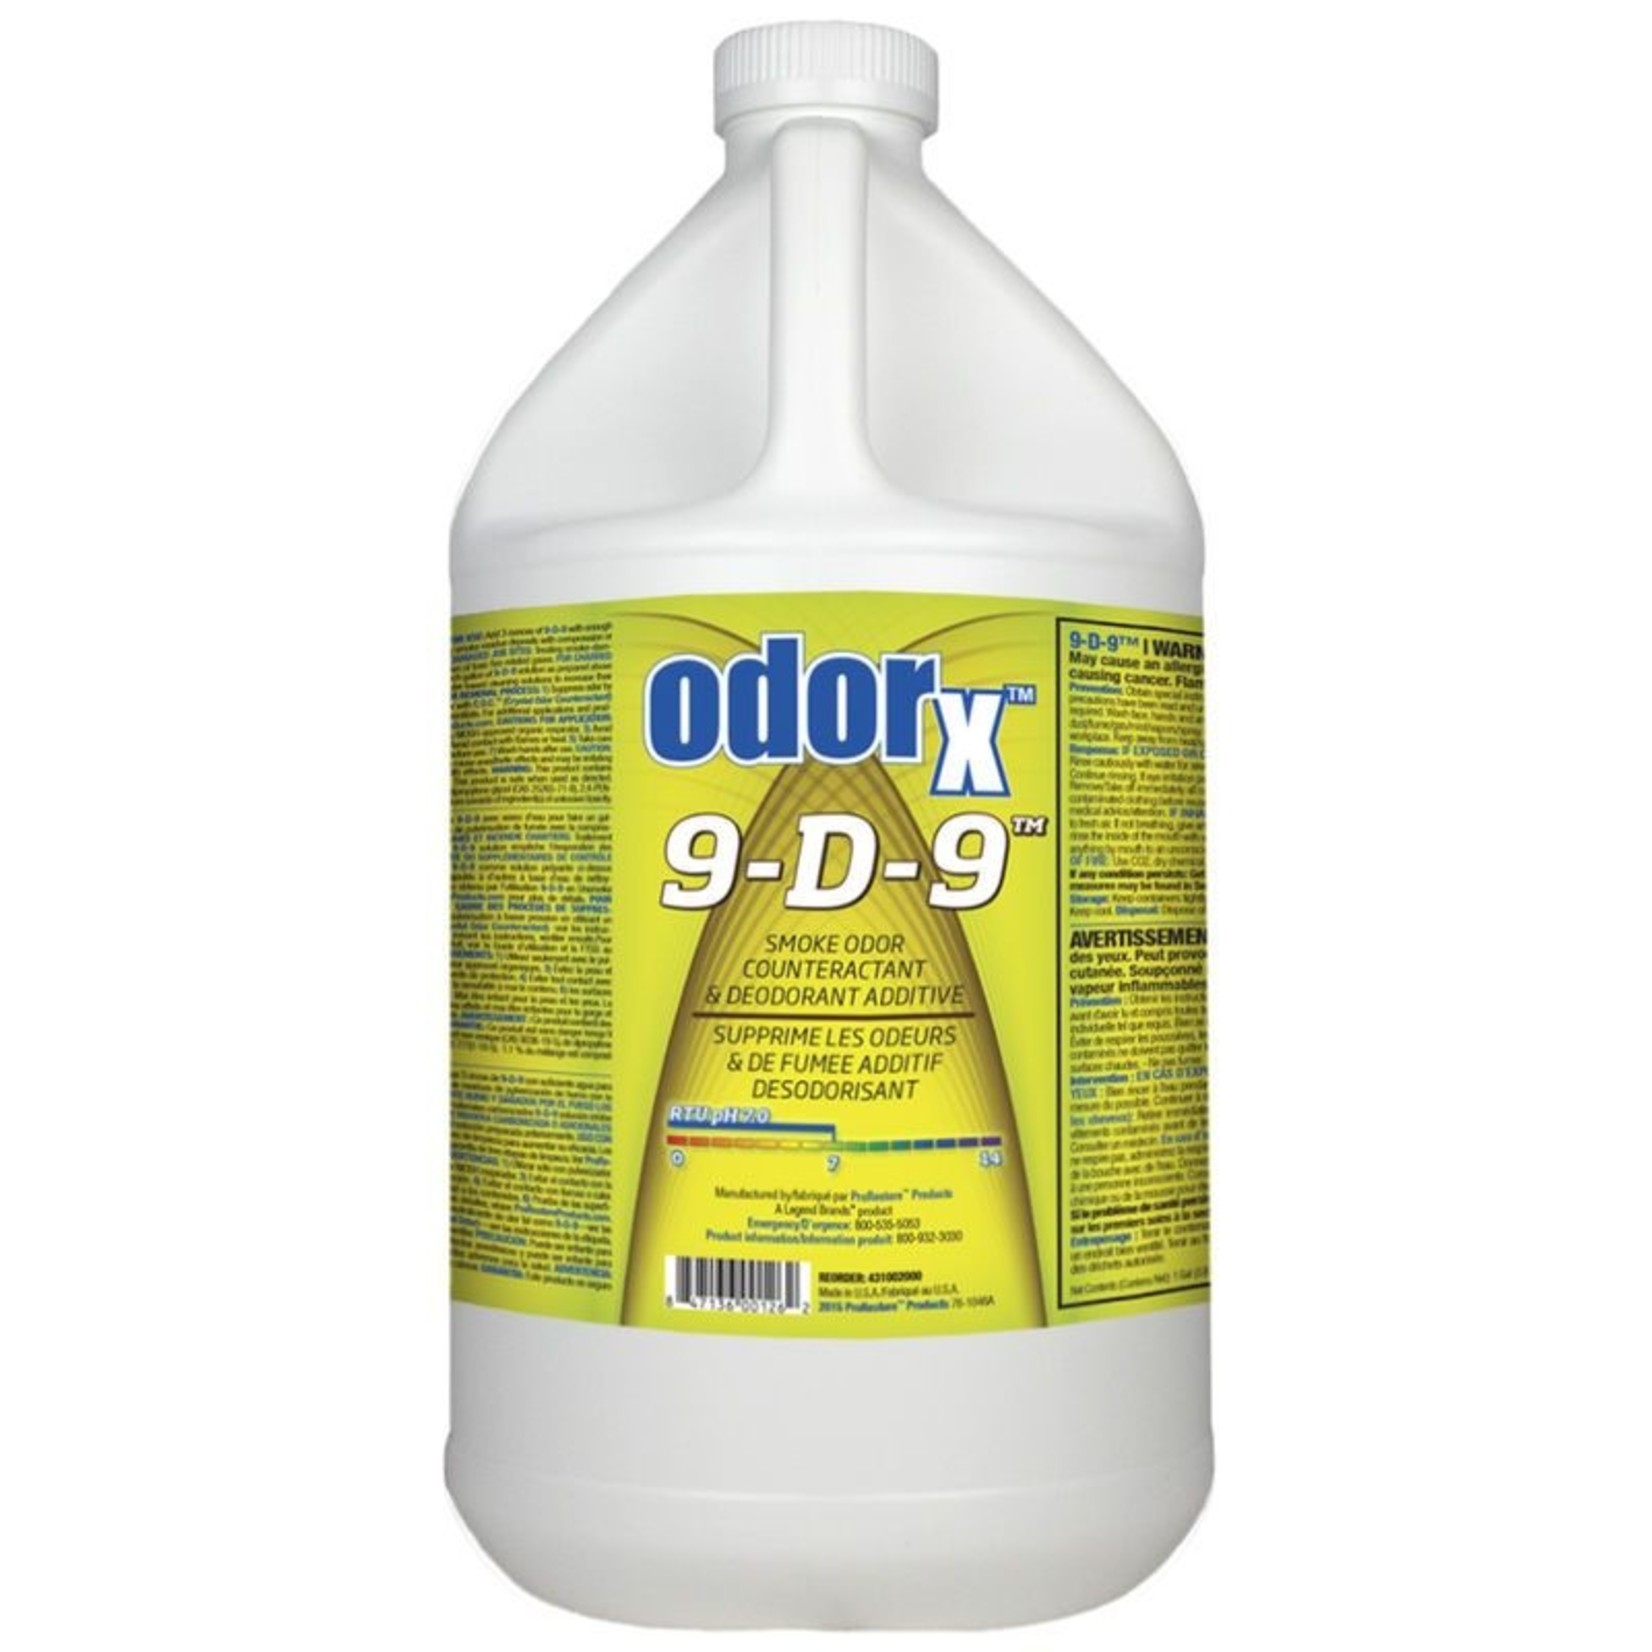 OdorX Odor X 9-D-9 1 gal